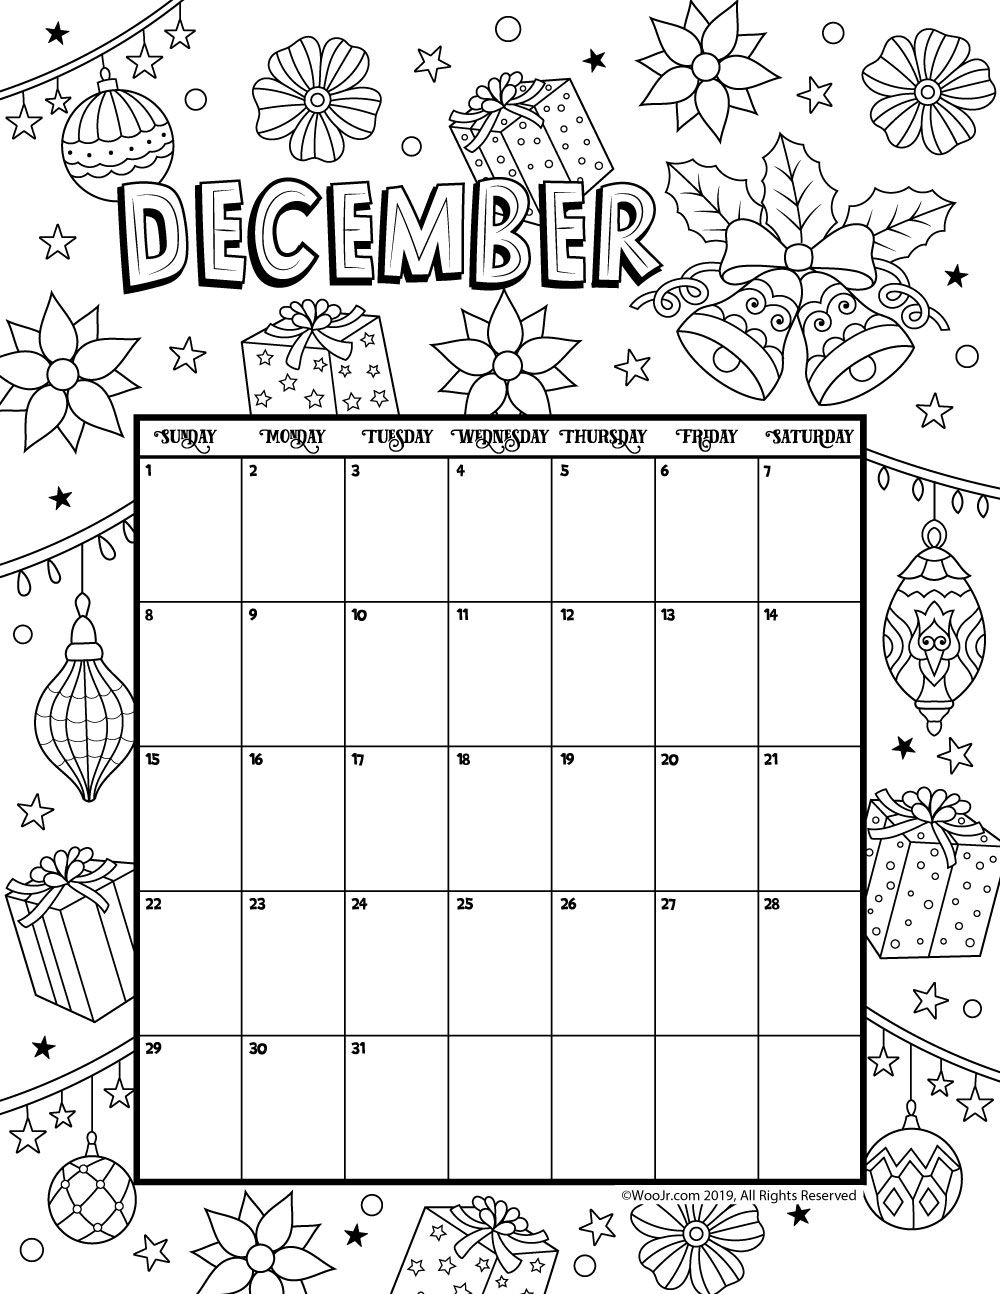 December Calendar 2021 Coloring Pages - Calendar For 2021